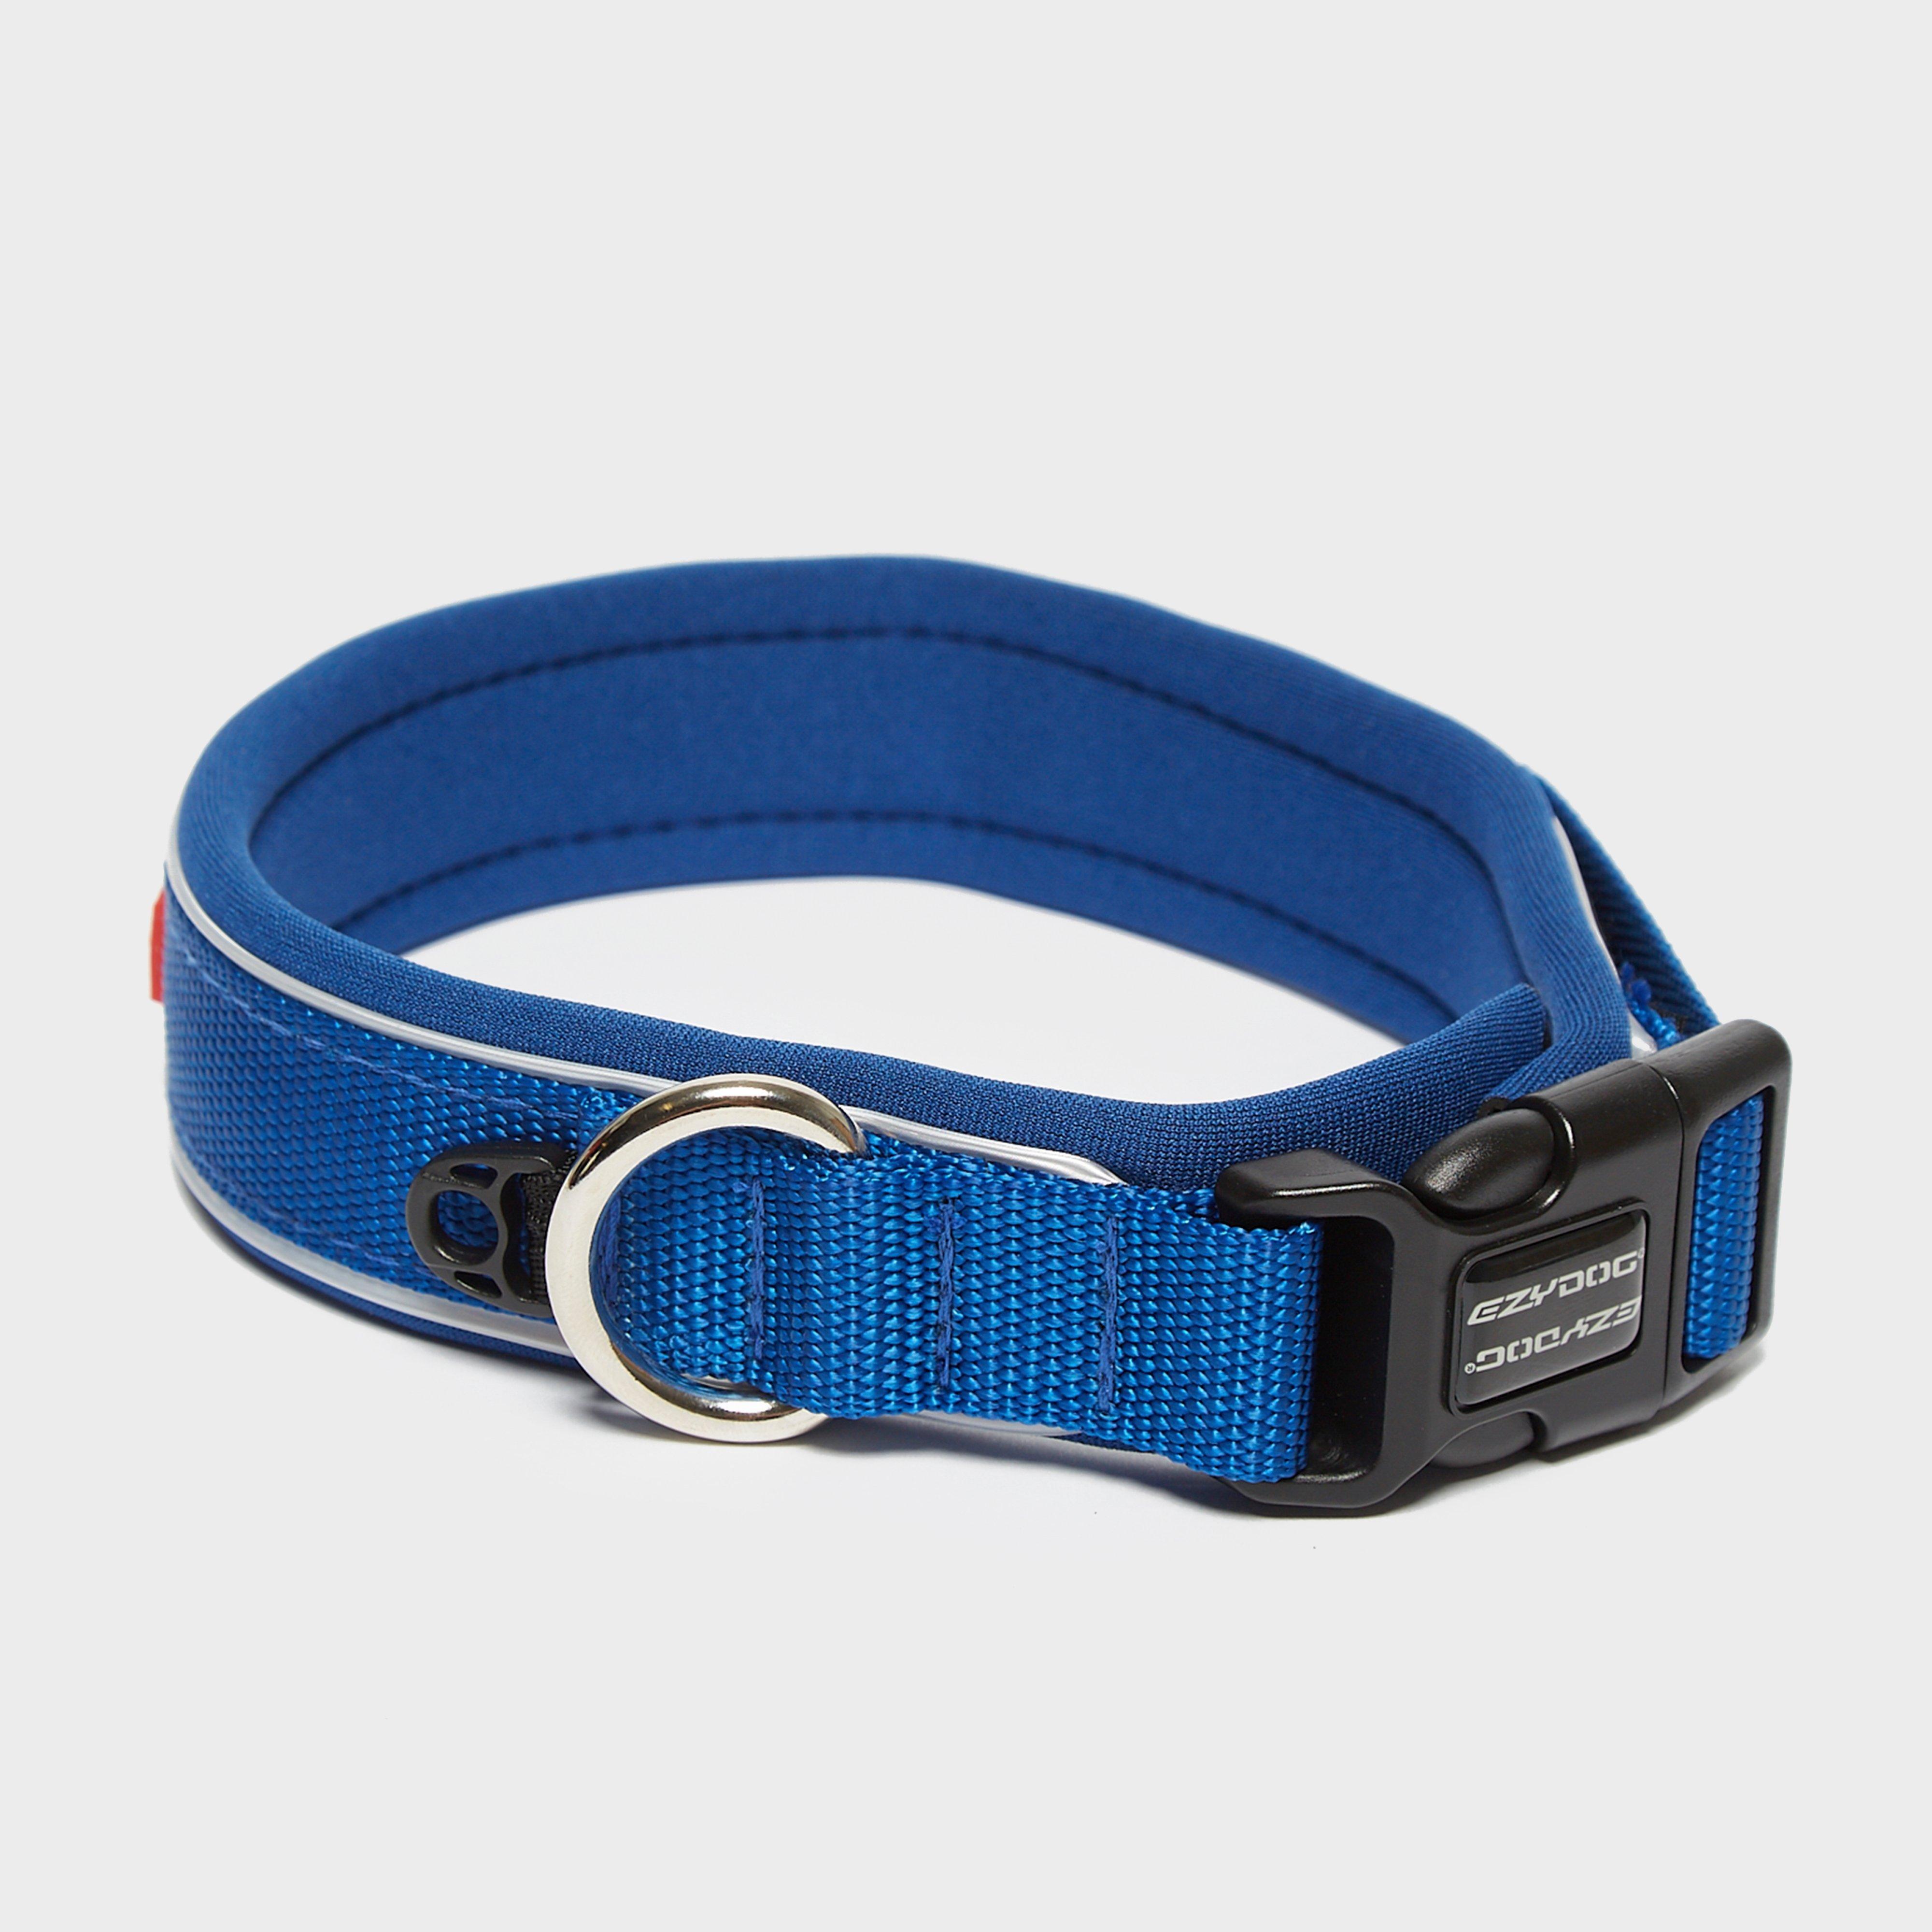 Ezy-dog Classic Neo Collar (large) - Blue/mbl  Blue/mbl